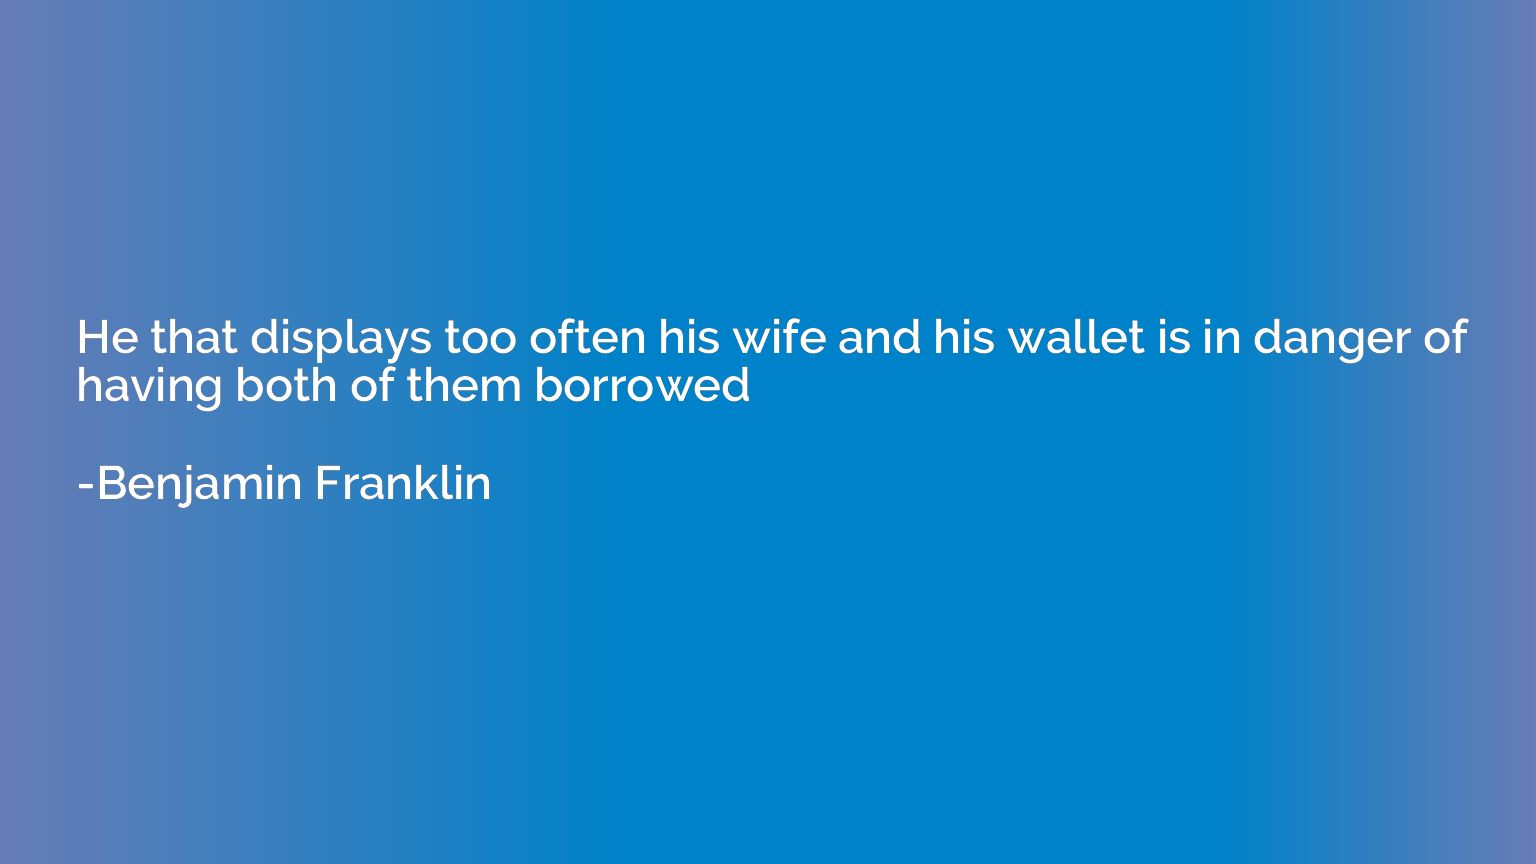 He that displays too often his wife and his wallet is in dan